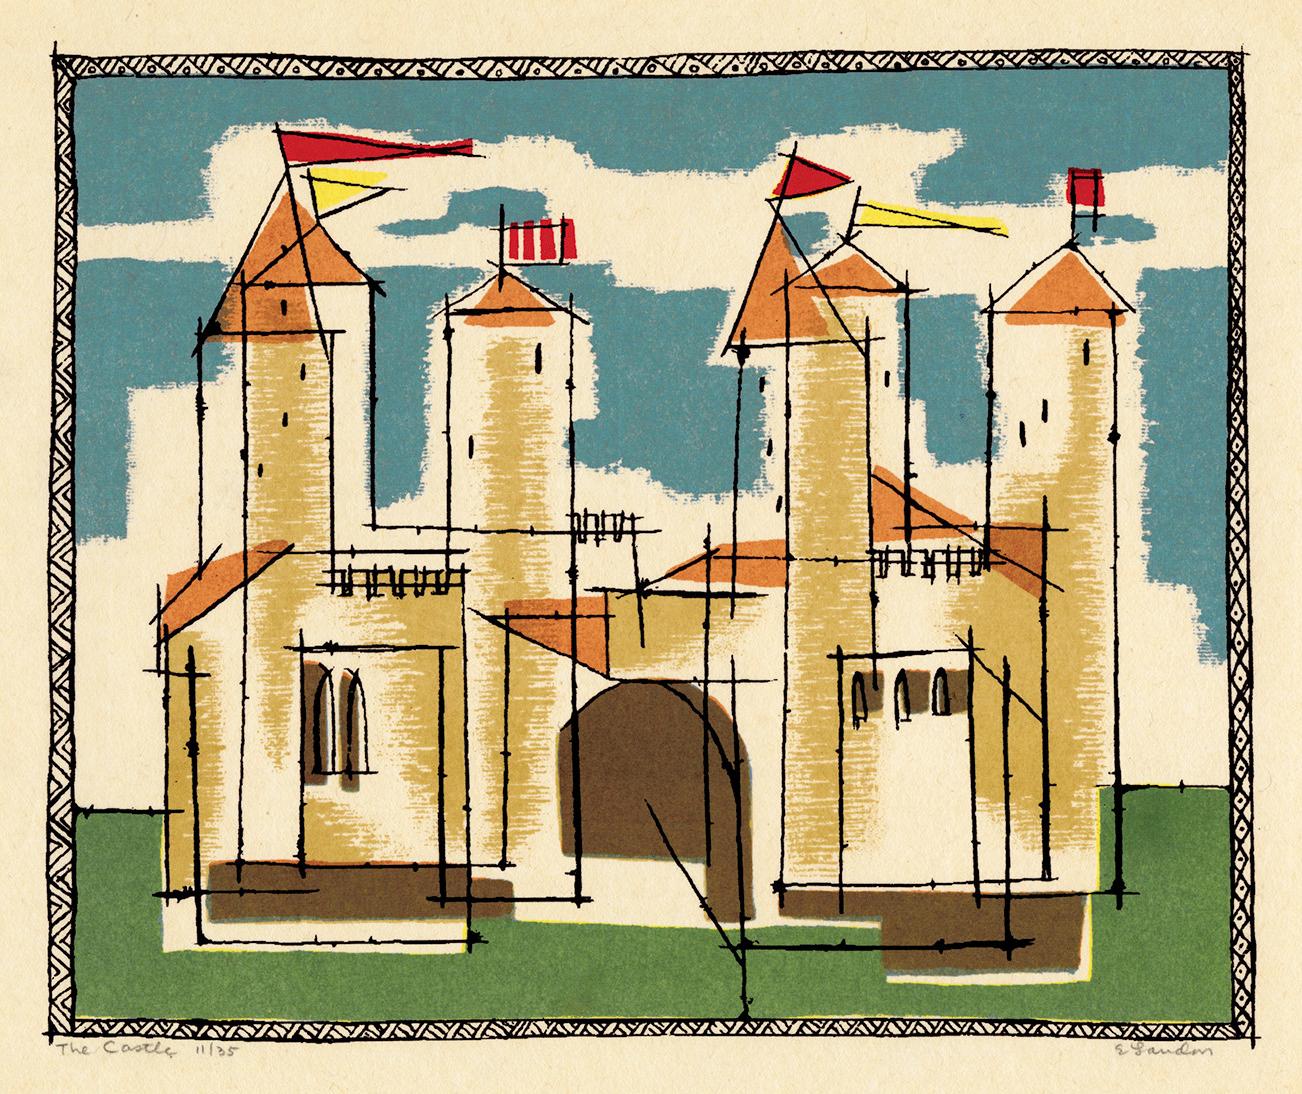 Edward August Landon Figurative Print - 'The Castle' — Mid-Century Modernist Children's Fantasy